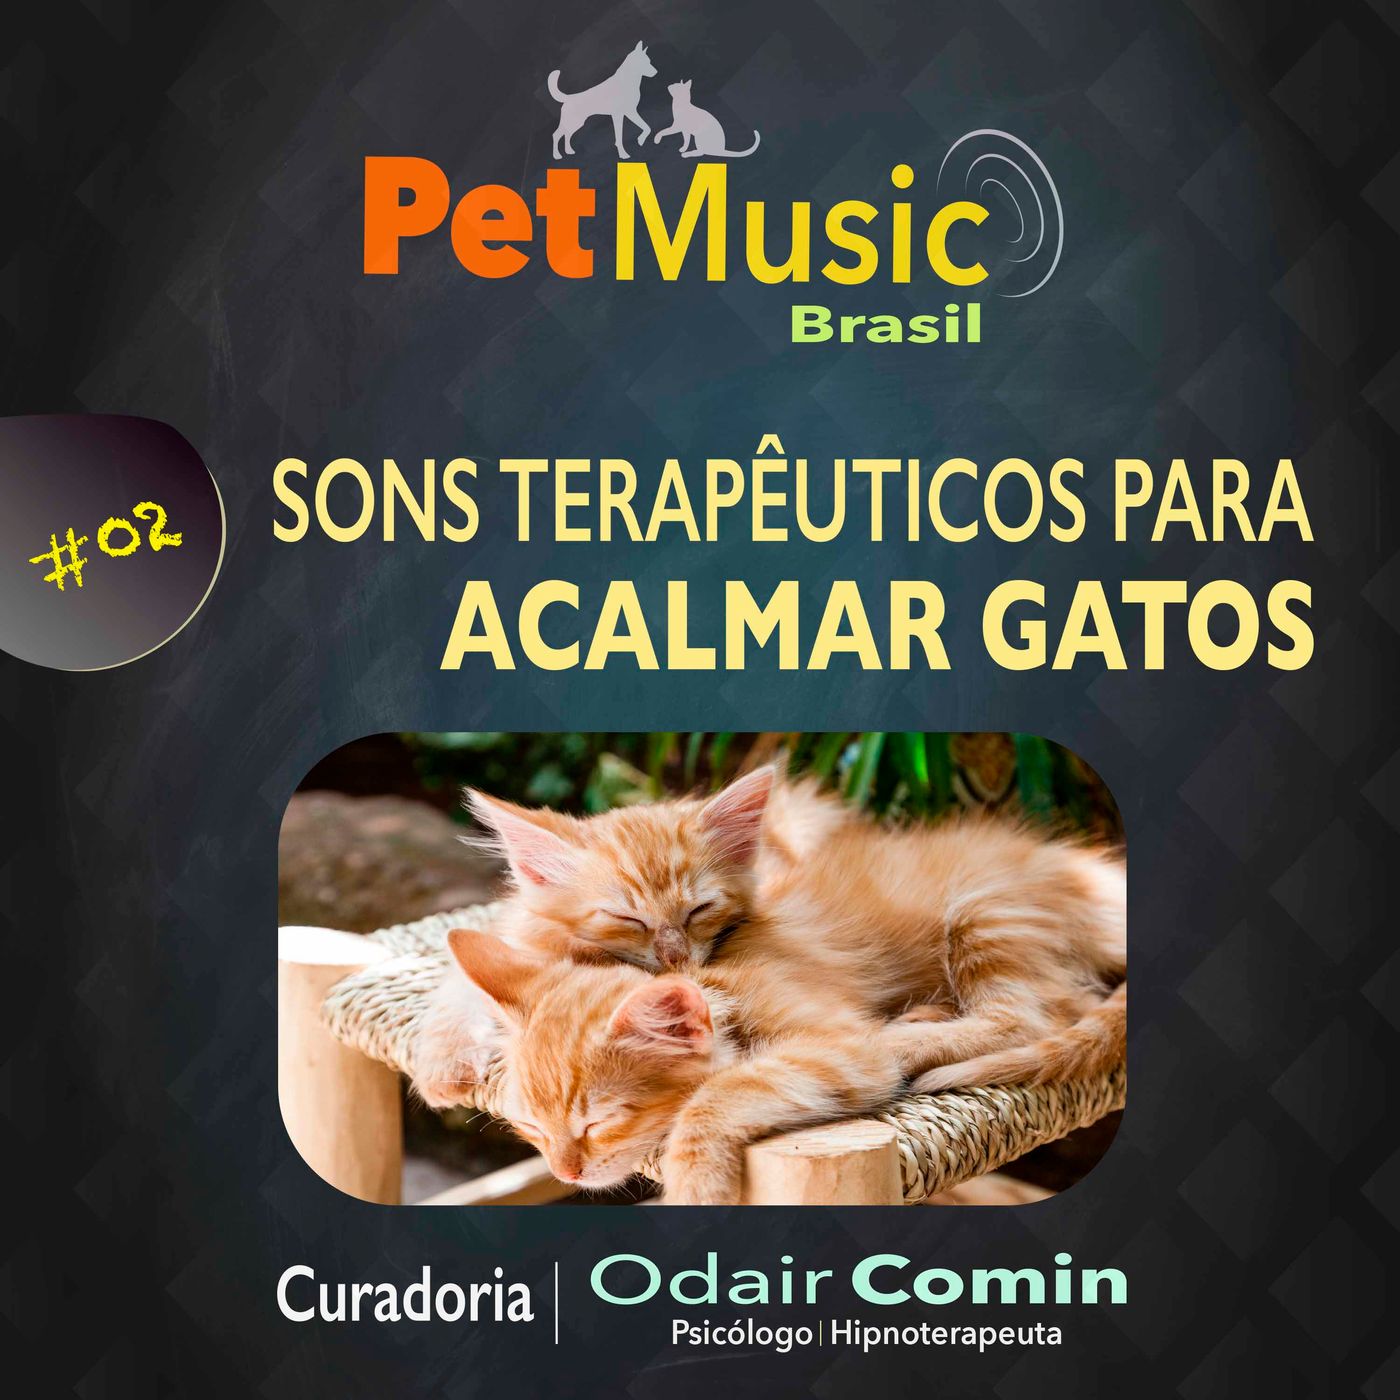 #02 Sons Terapêuticos para Acalmar Gatos | PetMusic